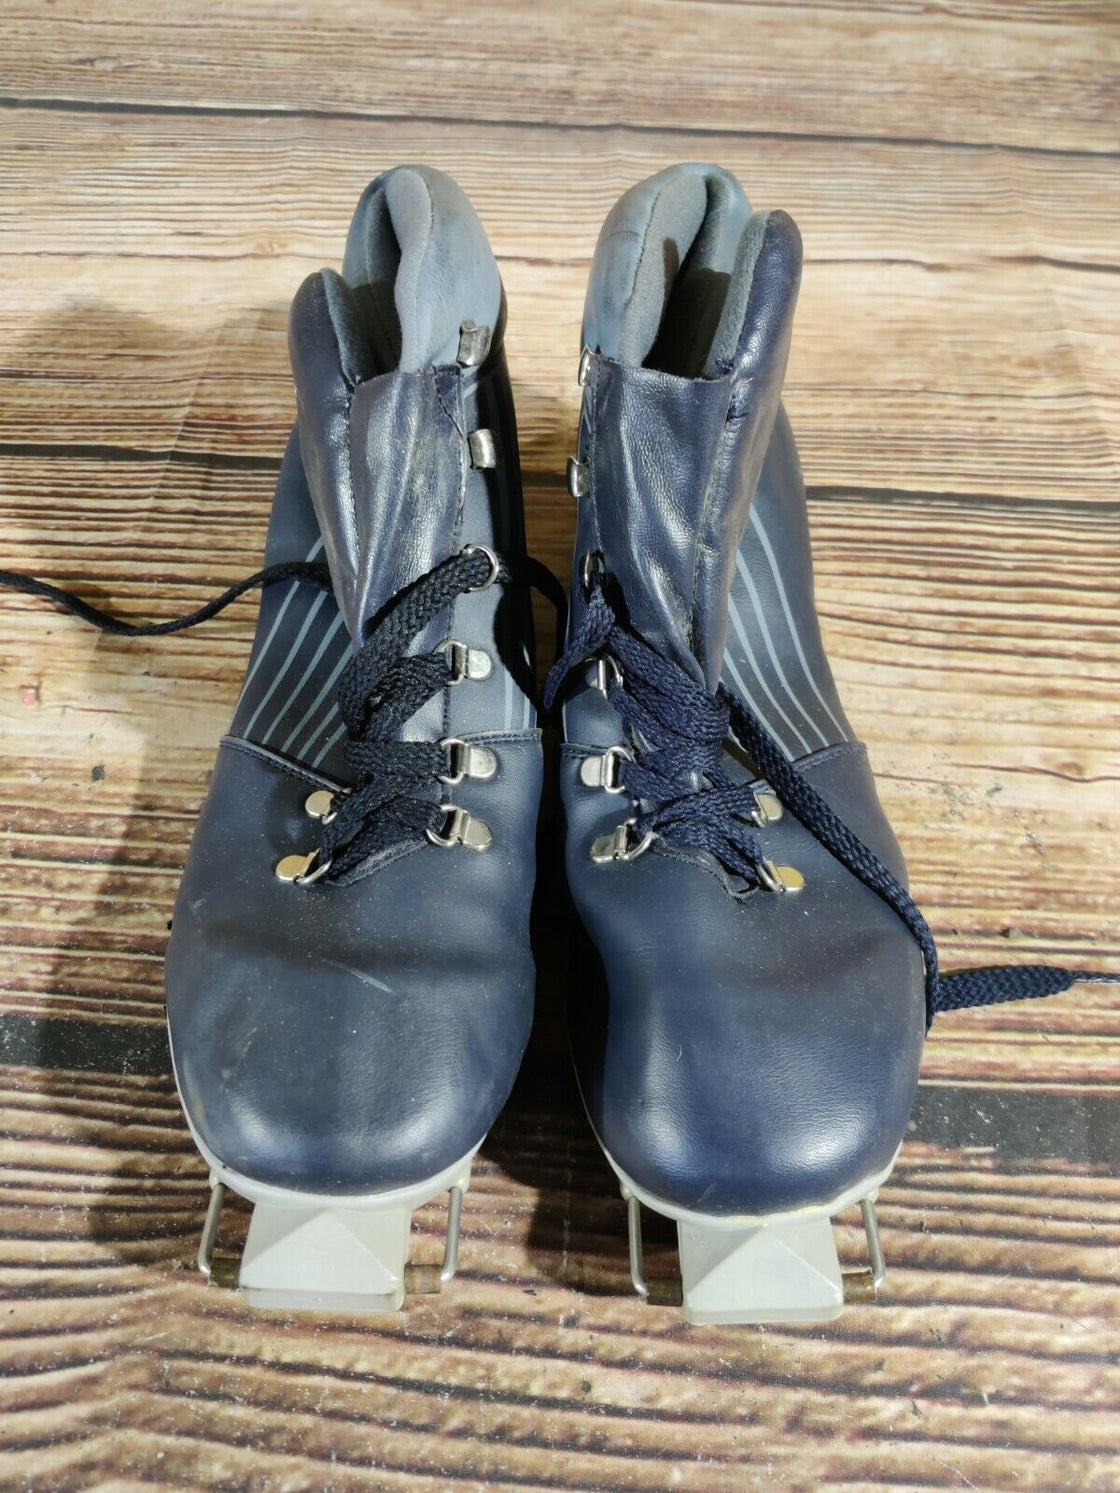 MONTJOLA Vintage Cross Country Ski Boots for RAMY Bindings Size  EU44, US10